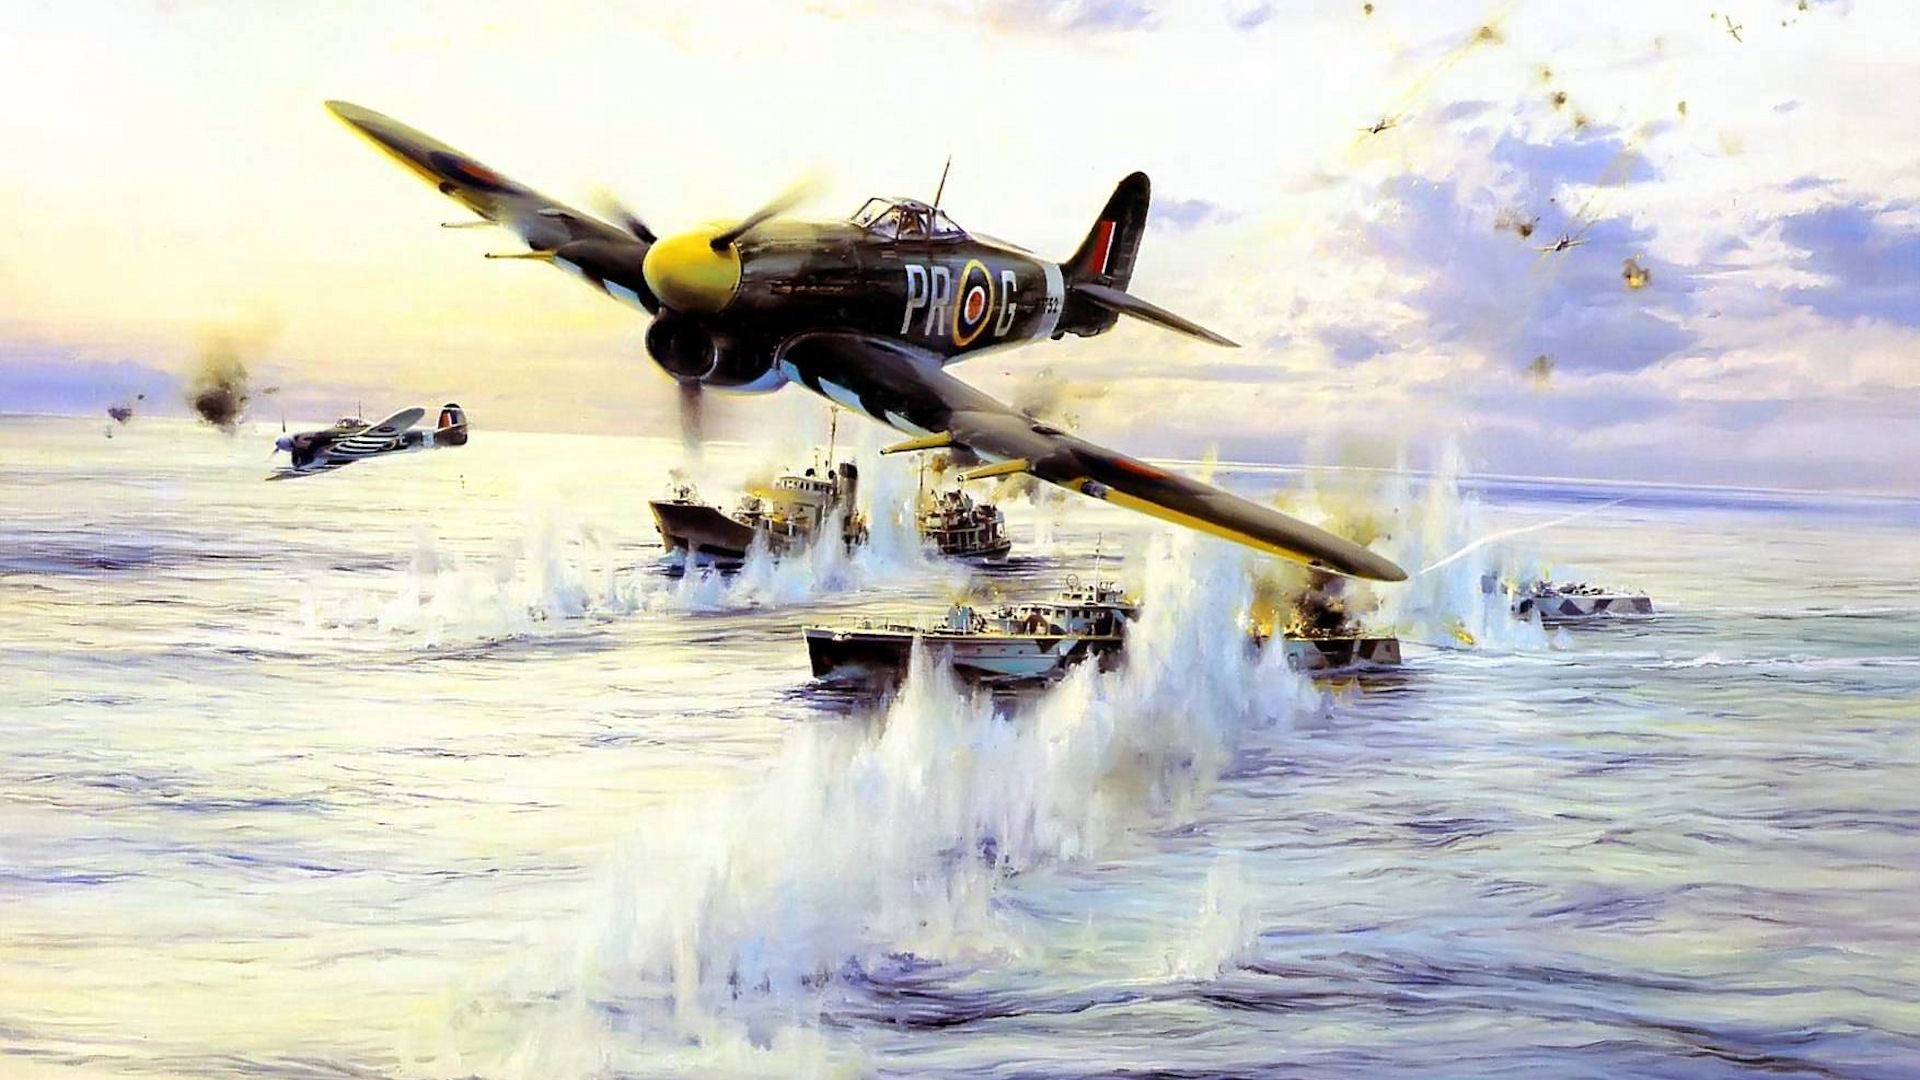 1920x1080 world war ii airplane aircraft hawker typhoon military military aircraft d day wallpaper JPG 345 kB Gallery HD Wallpaper